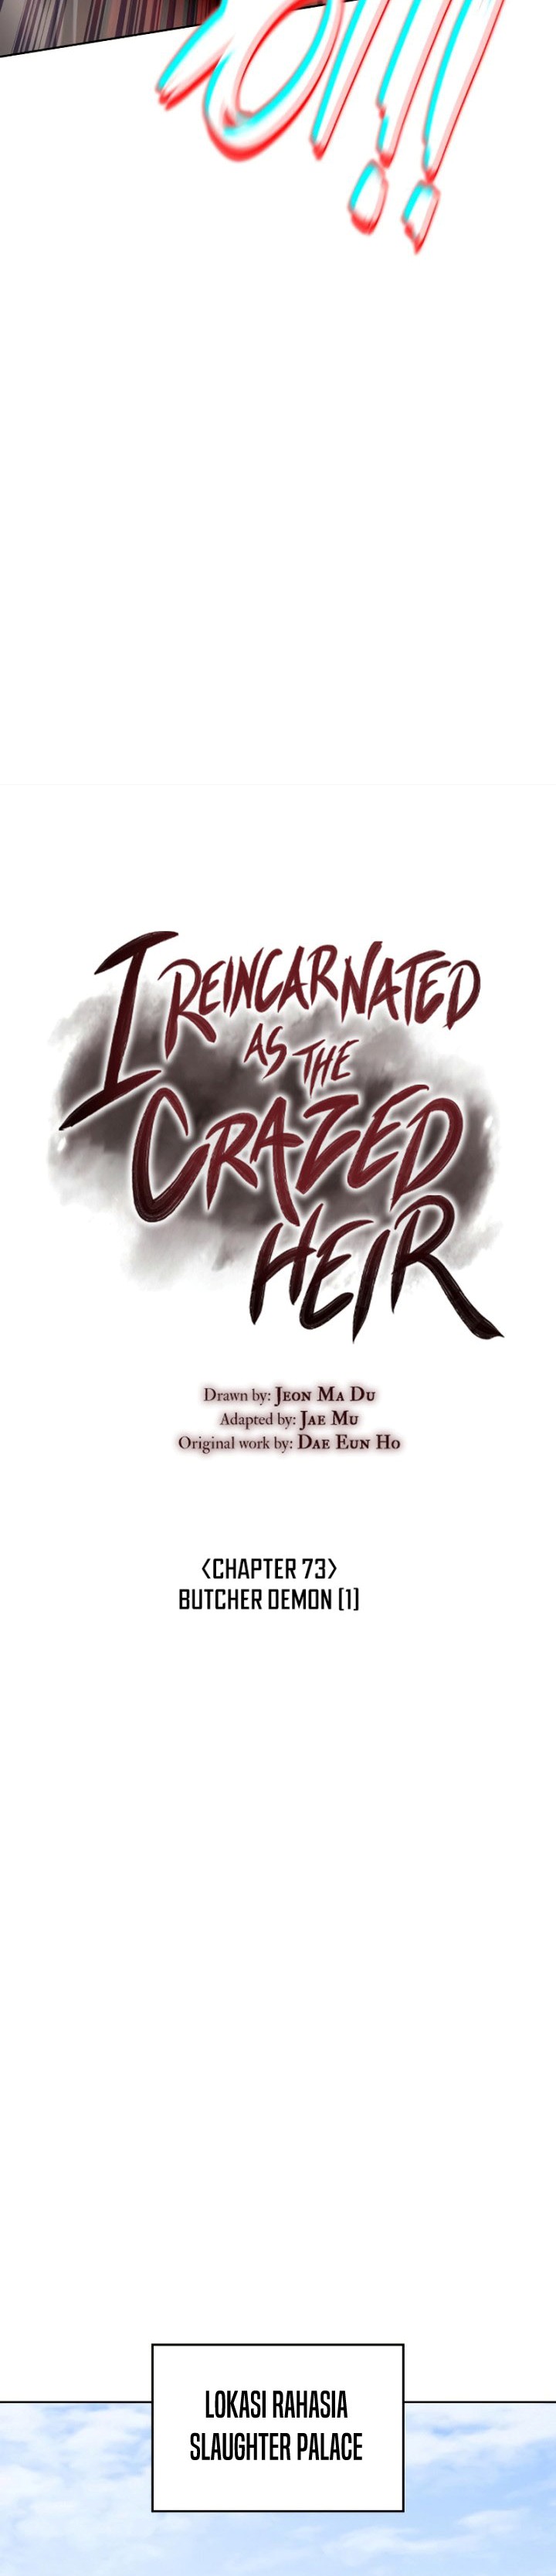 I Reincarnated As the Crazed Heir Chapter 73